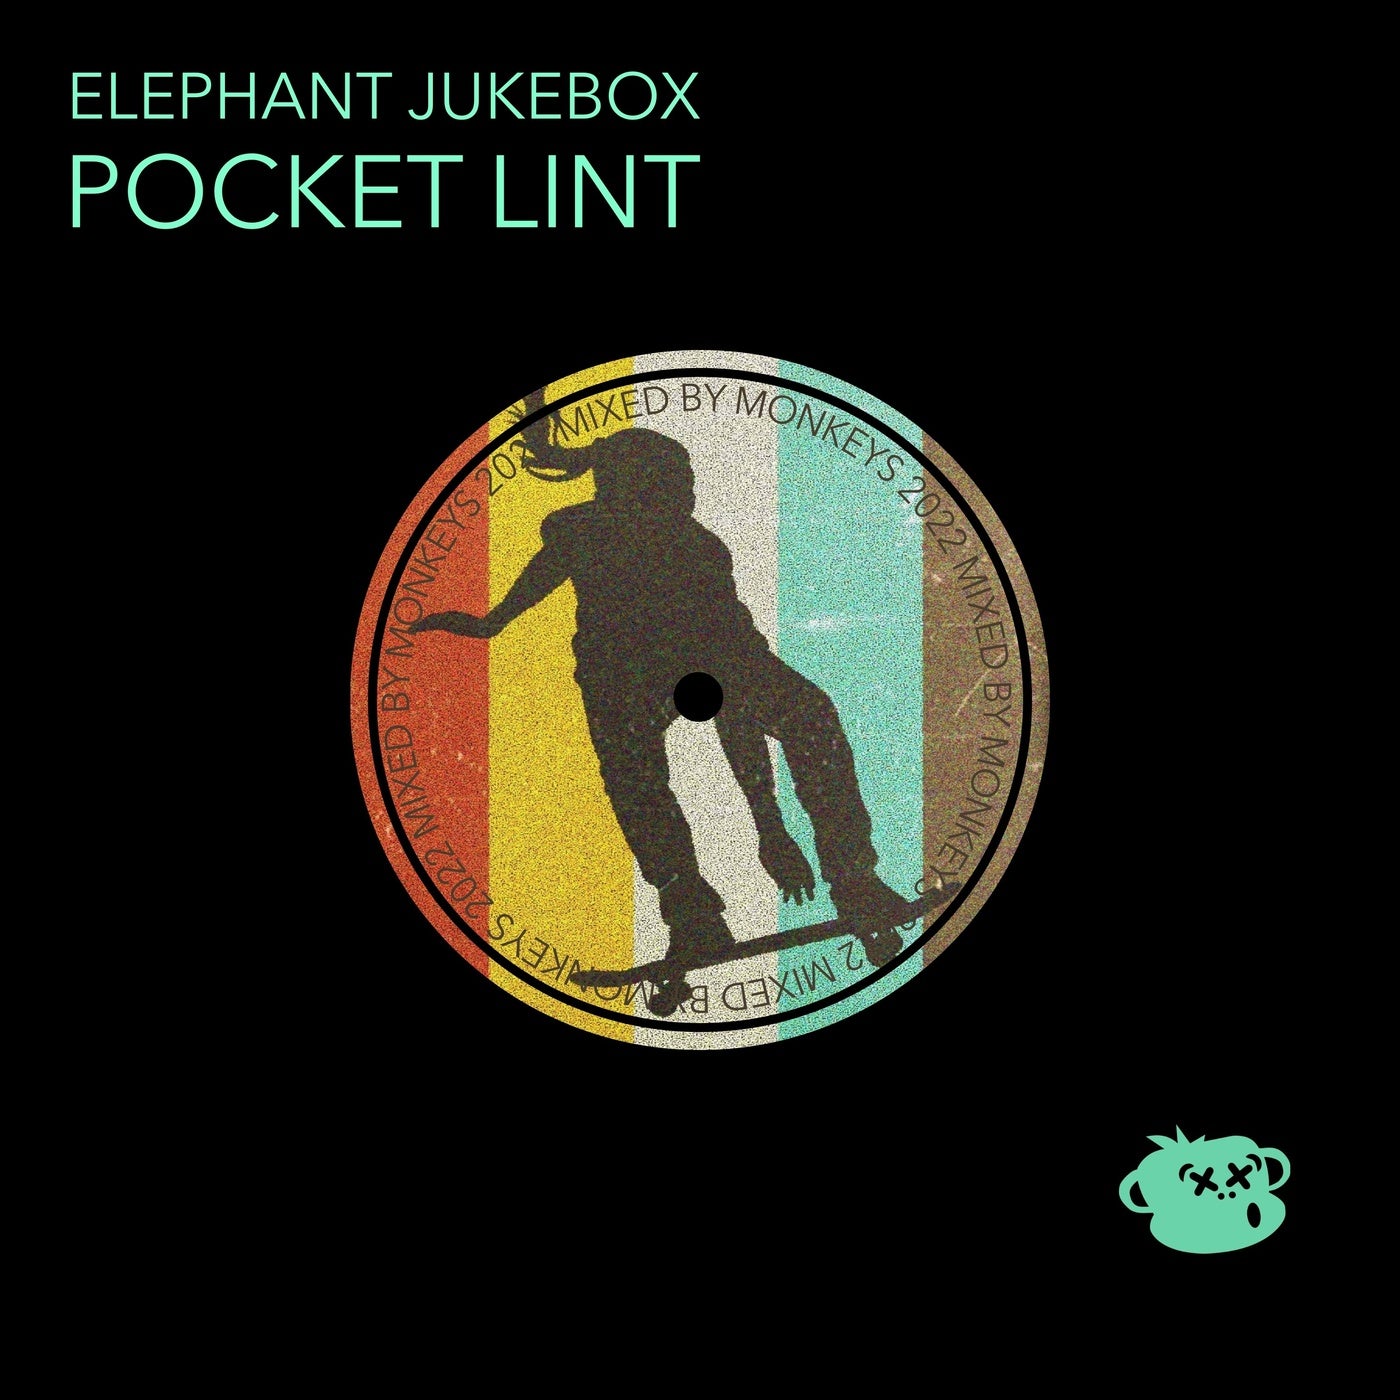 Pocket Lint